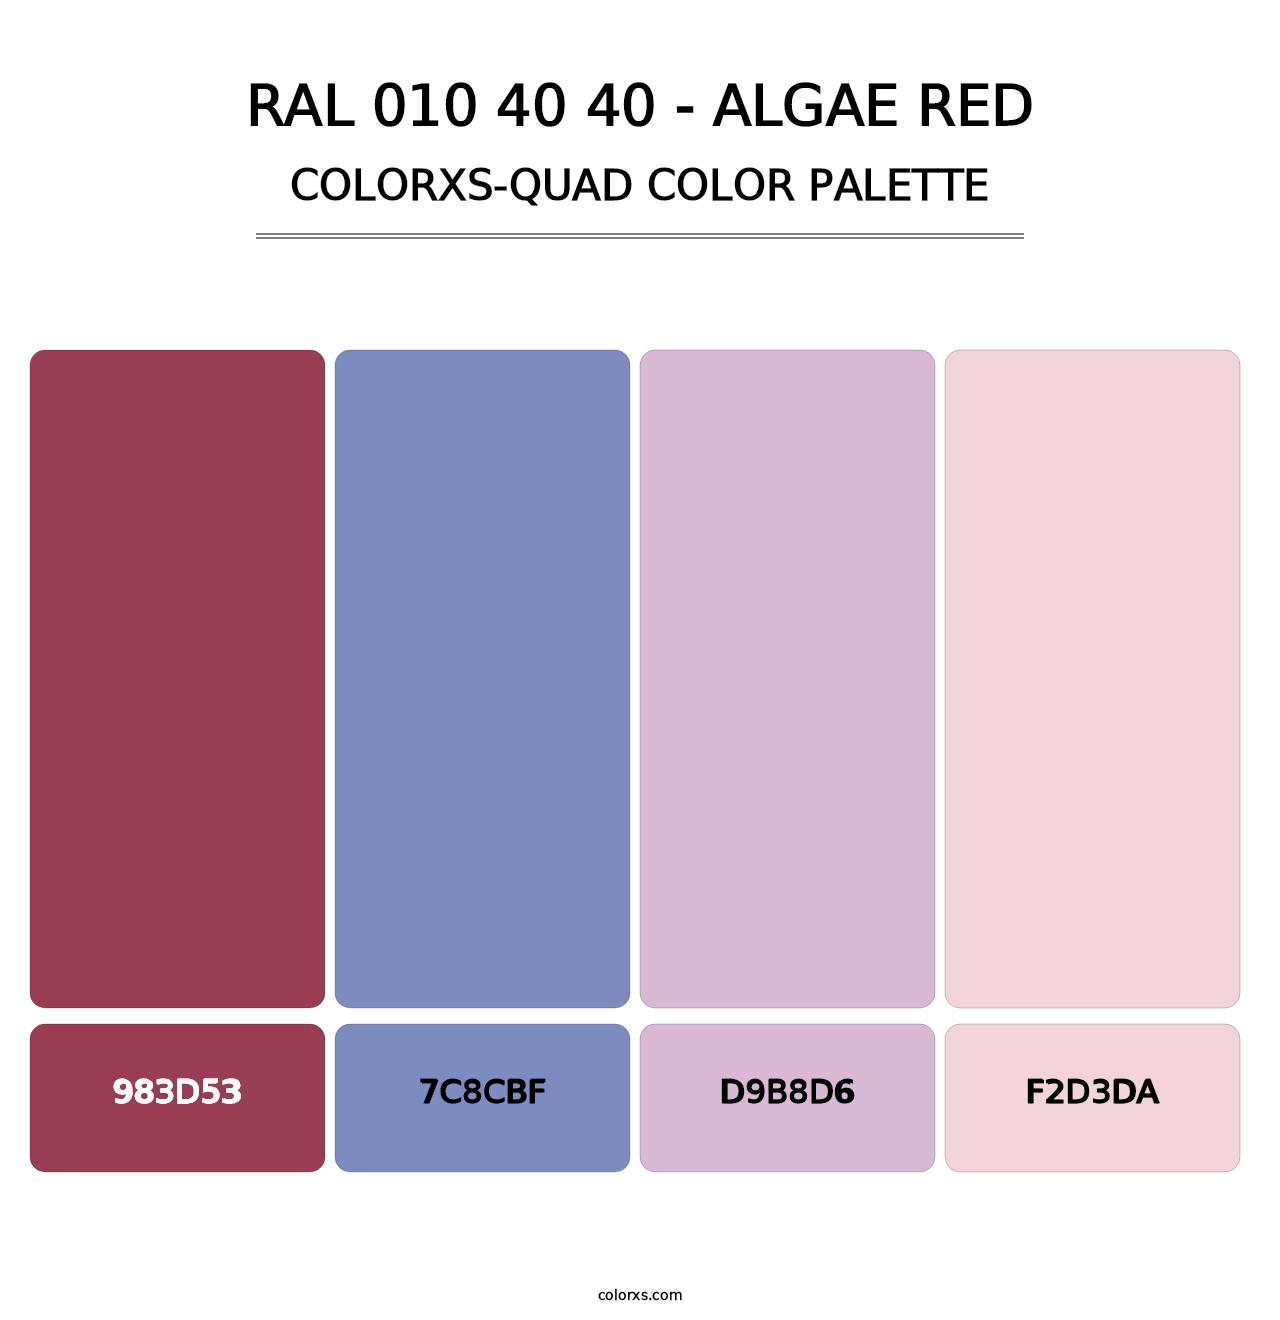 RAL 010 40 40 - Algae Red - Colorxs Quad Palette